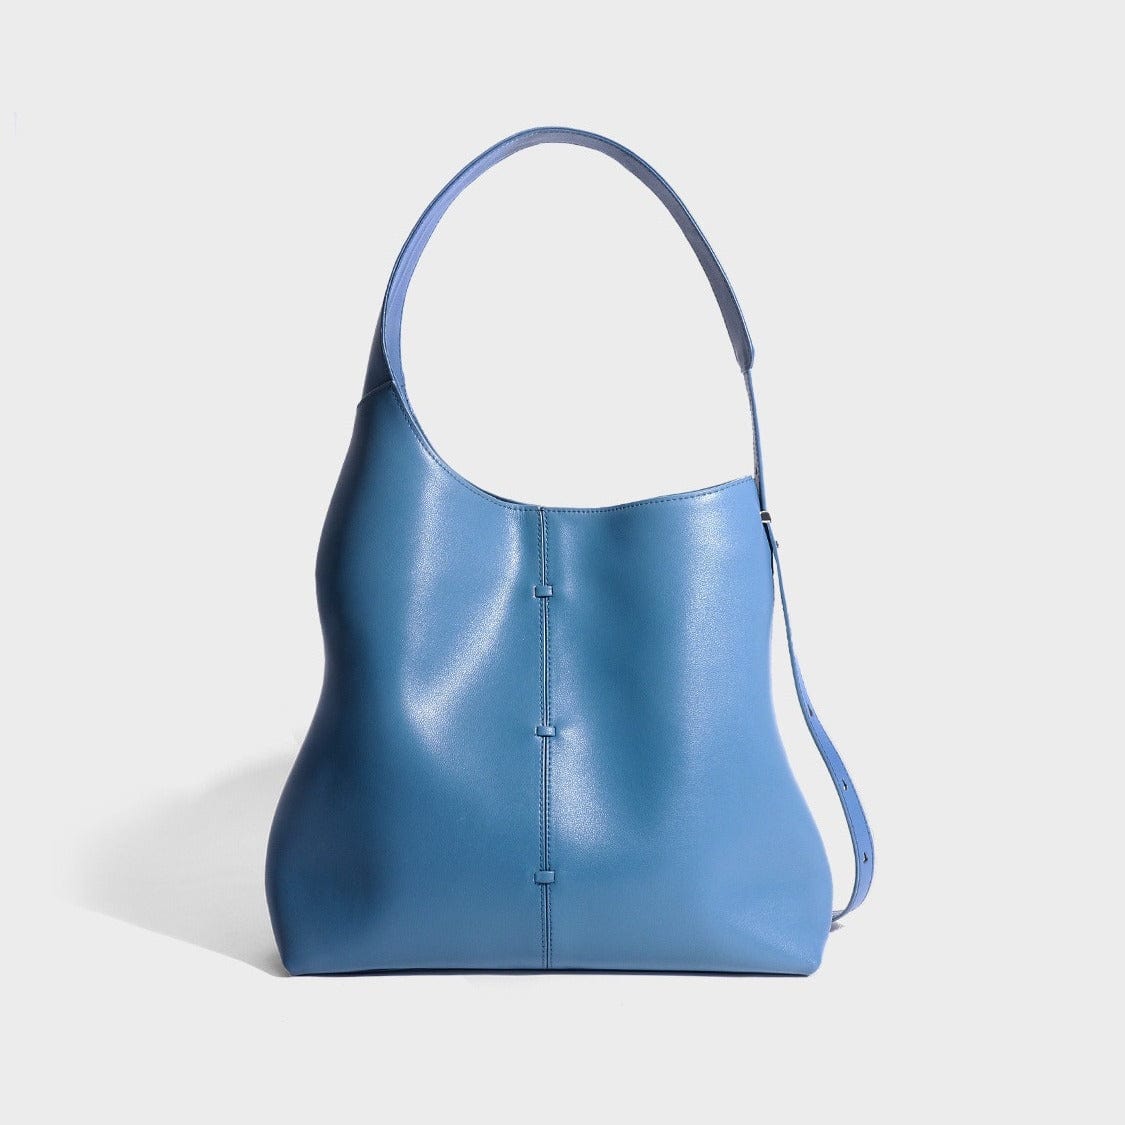 a blue handbag on a white background1 